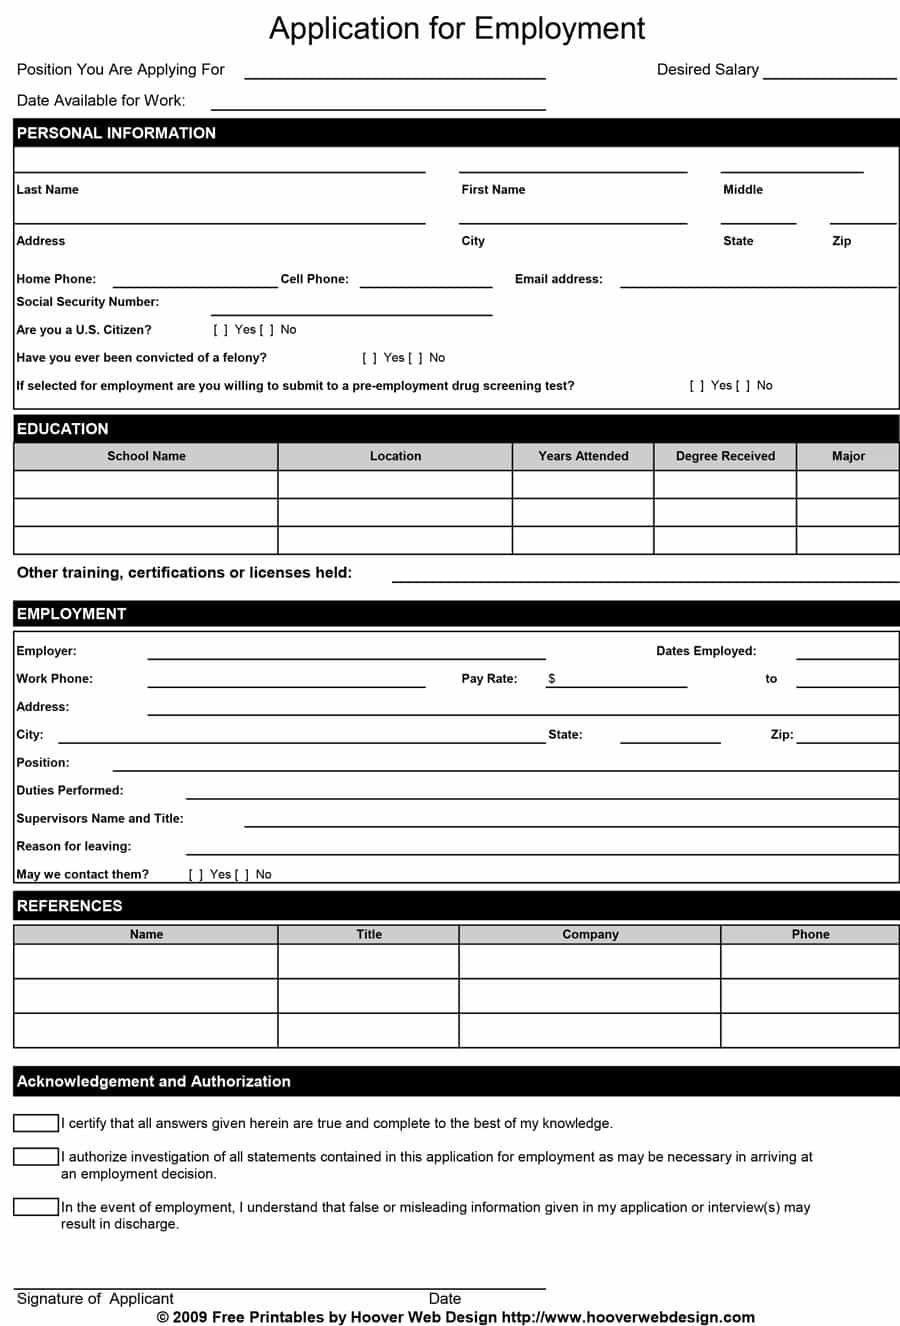 50 Free Employment / Job Application Form Templates [Printable - Free Online Printable Applications